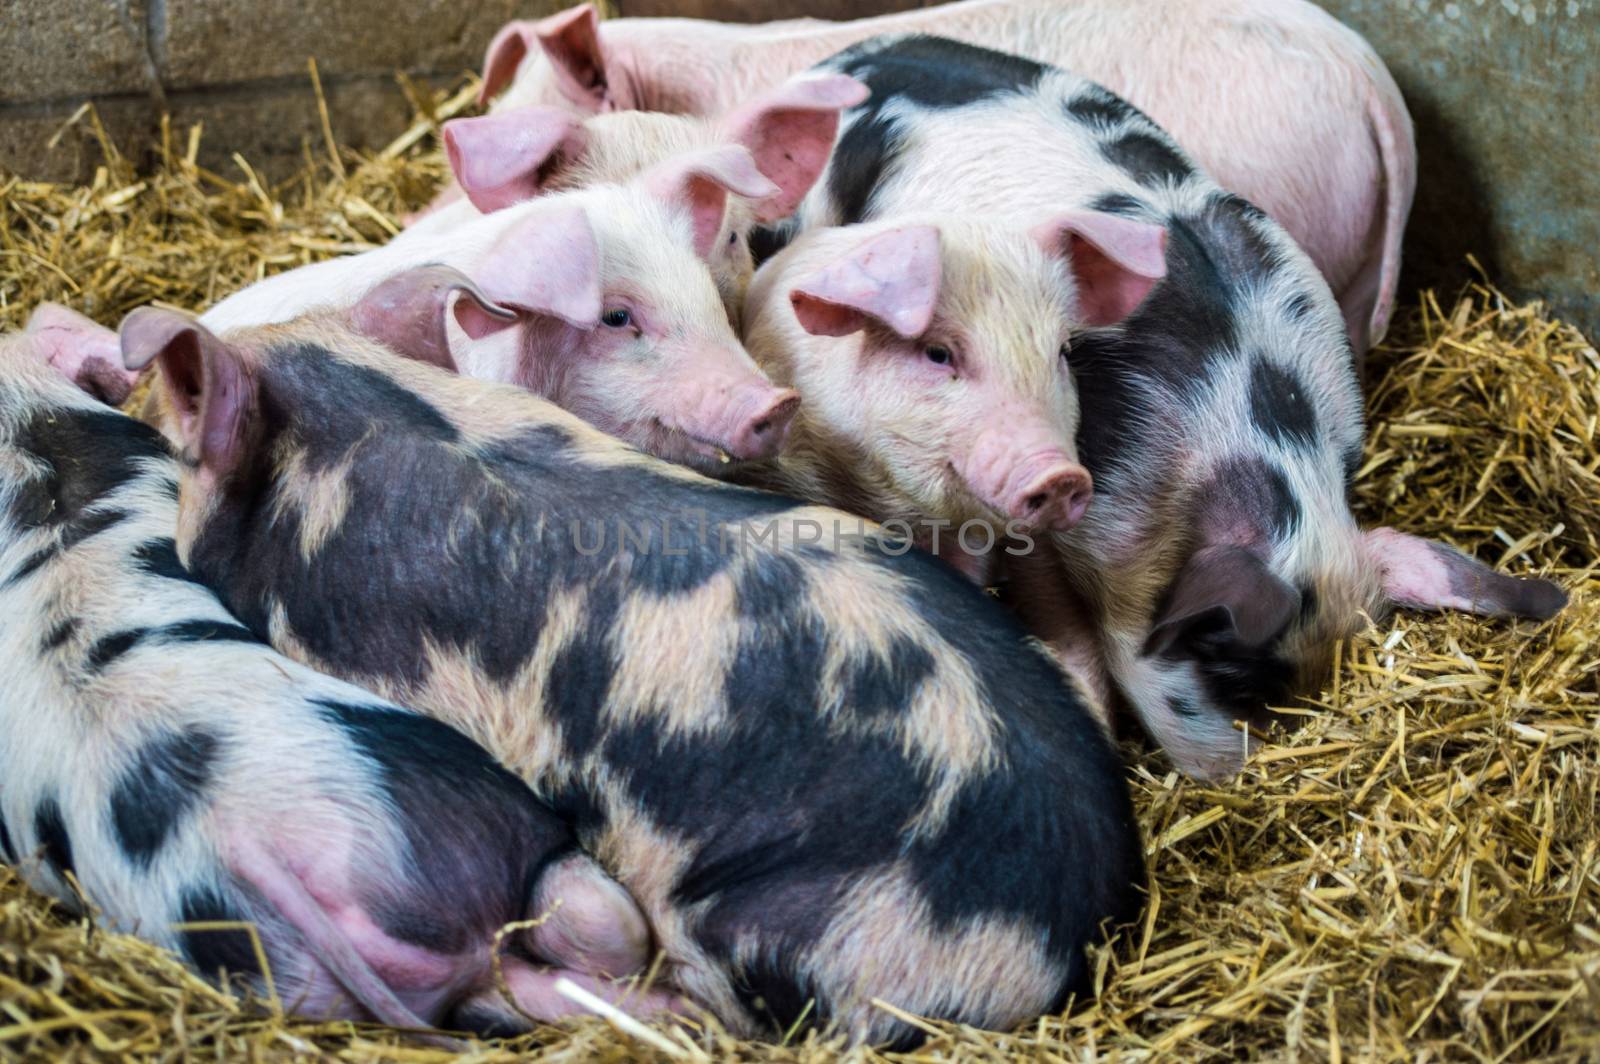 A litter of Gloucester Old Spot piglets bundled together in their sty. Berkshire farm, springtime.